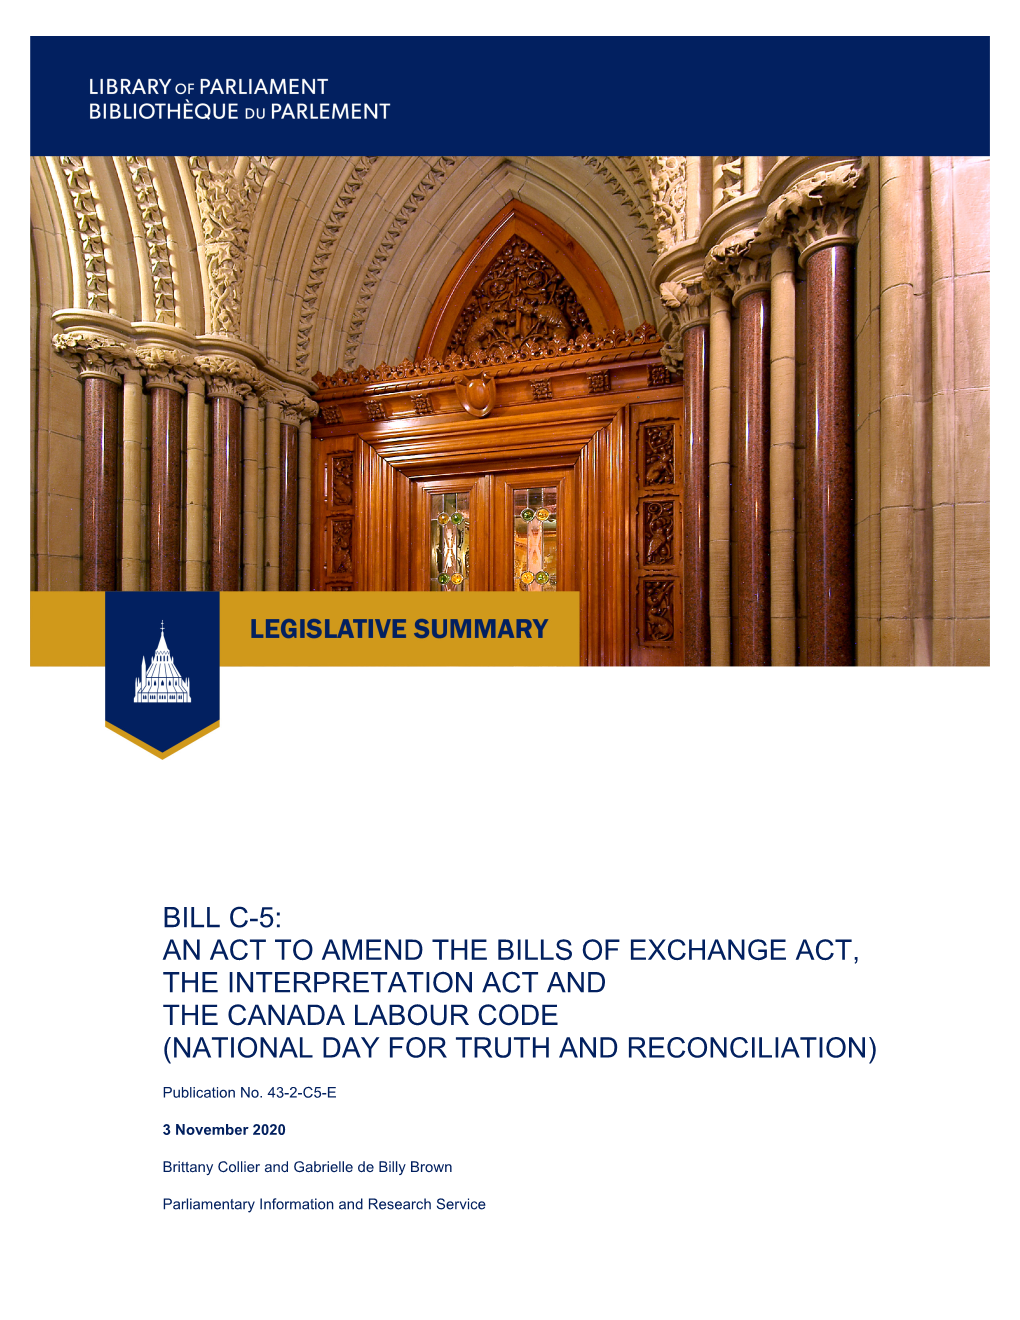 Legislative Summary of BILL C-5: an ACT to AMEND the BILLS OF